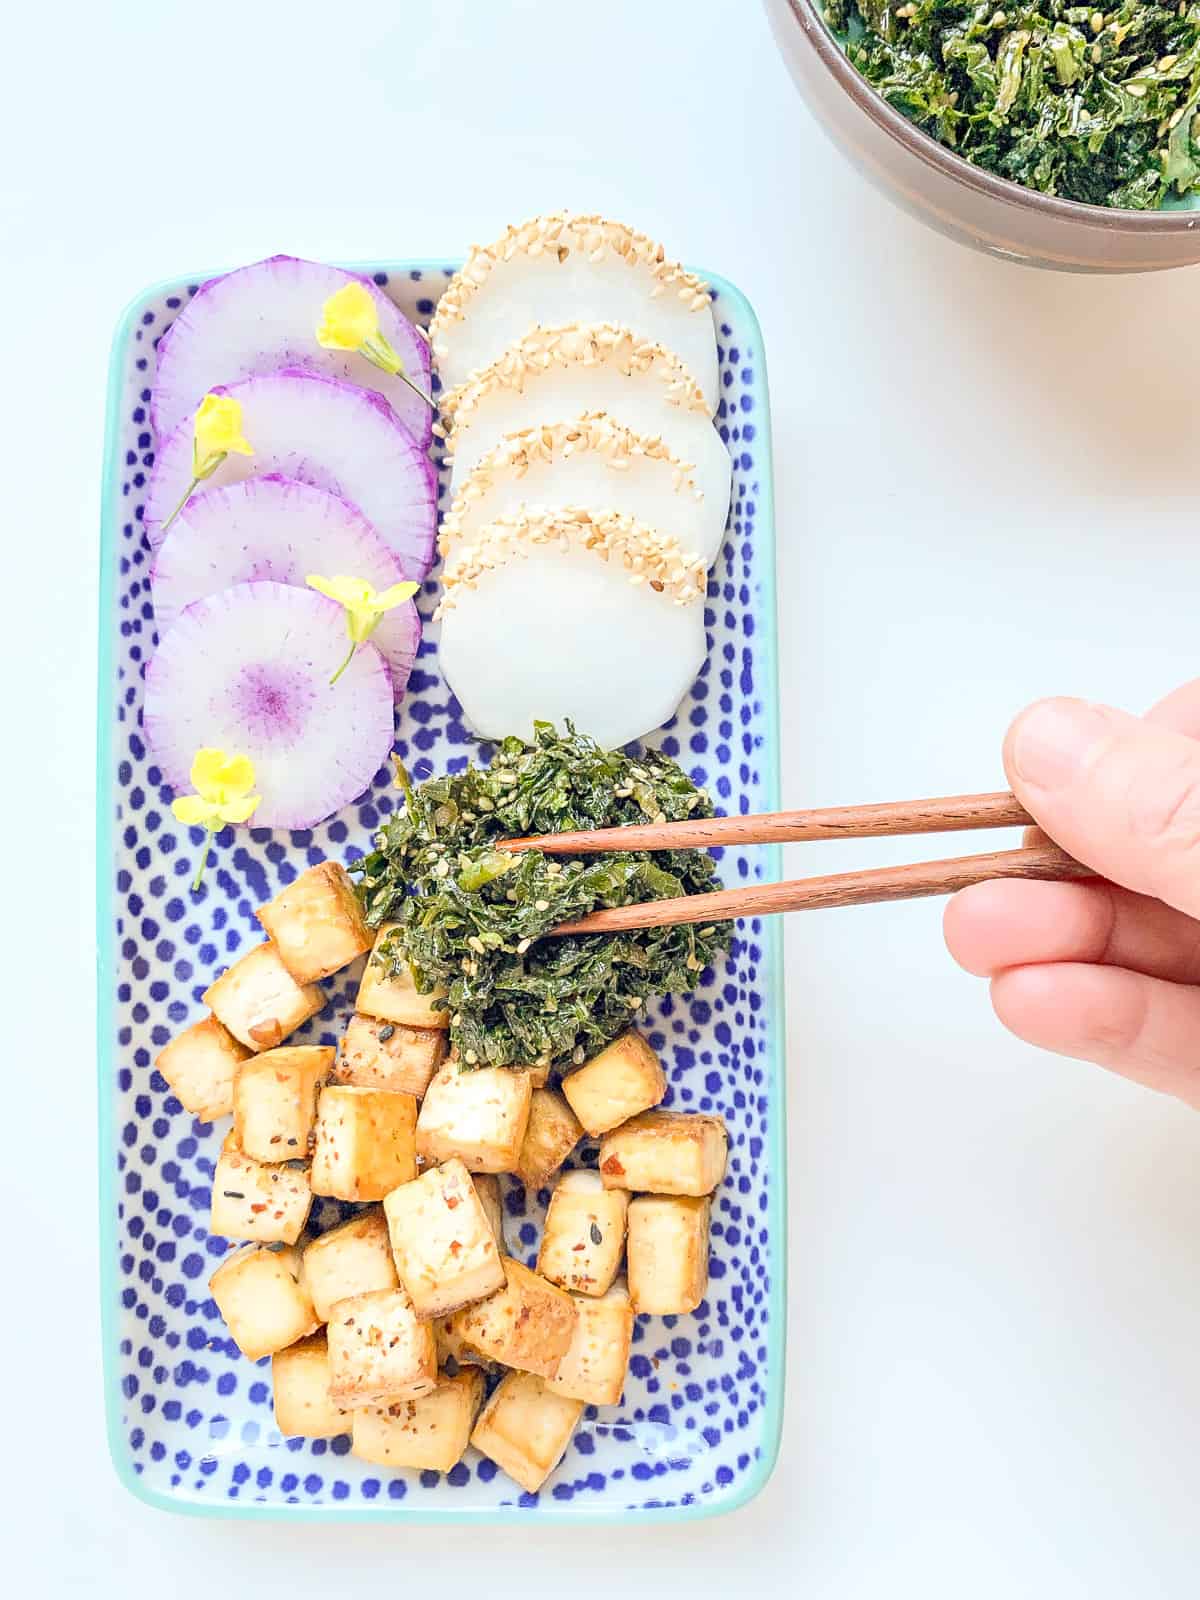 An image of Fresh Garden Furikake on a japanese style plate alongside radishes and tofu.